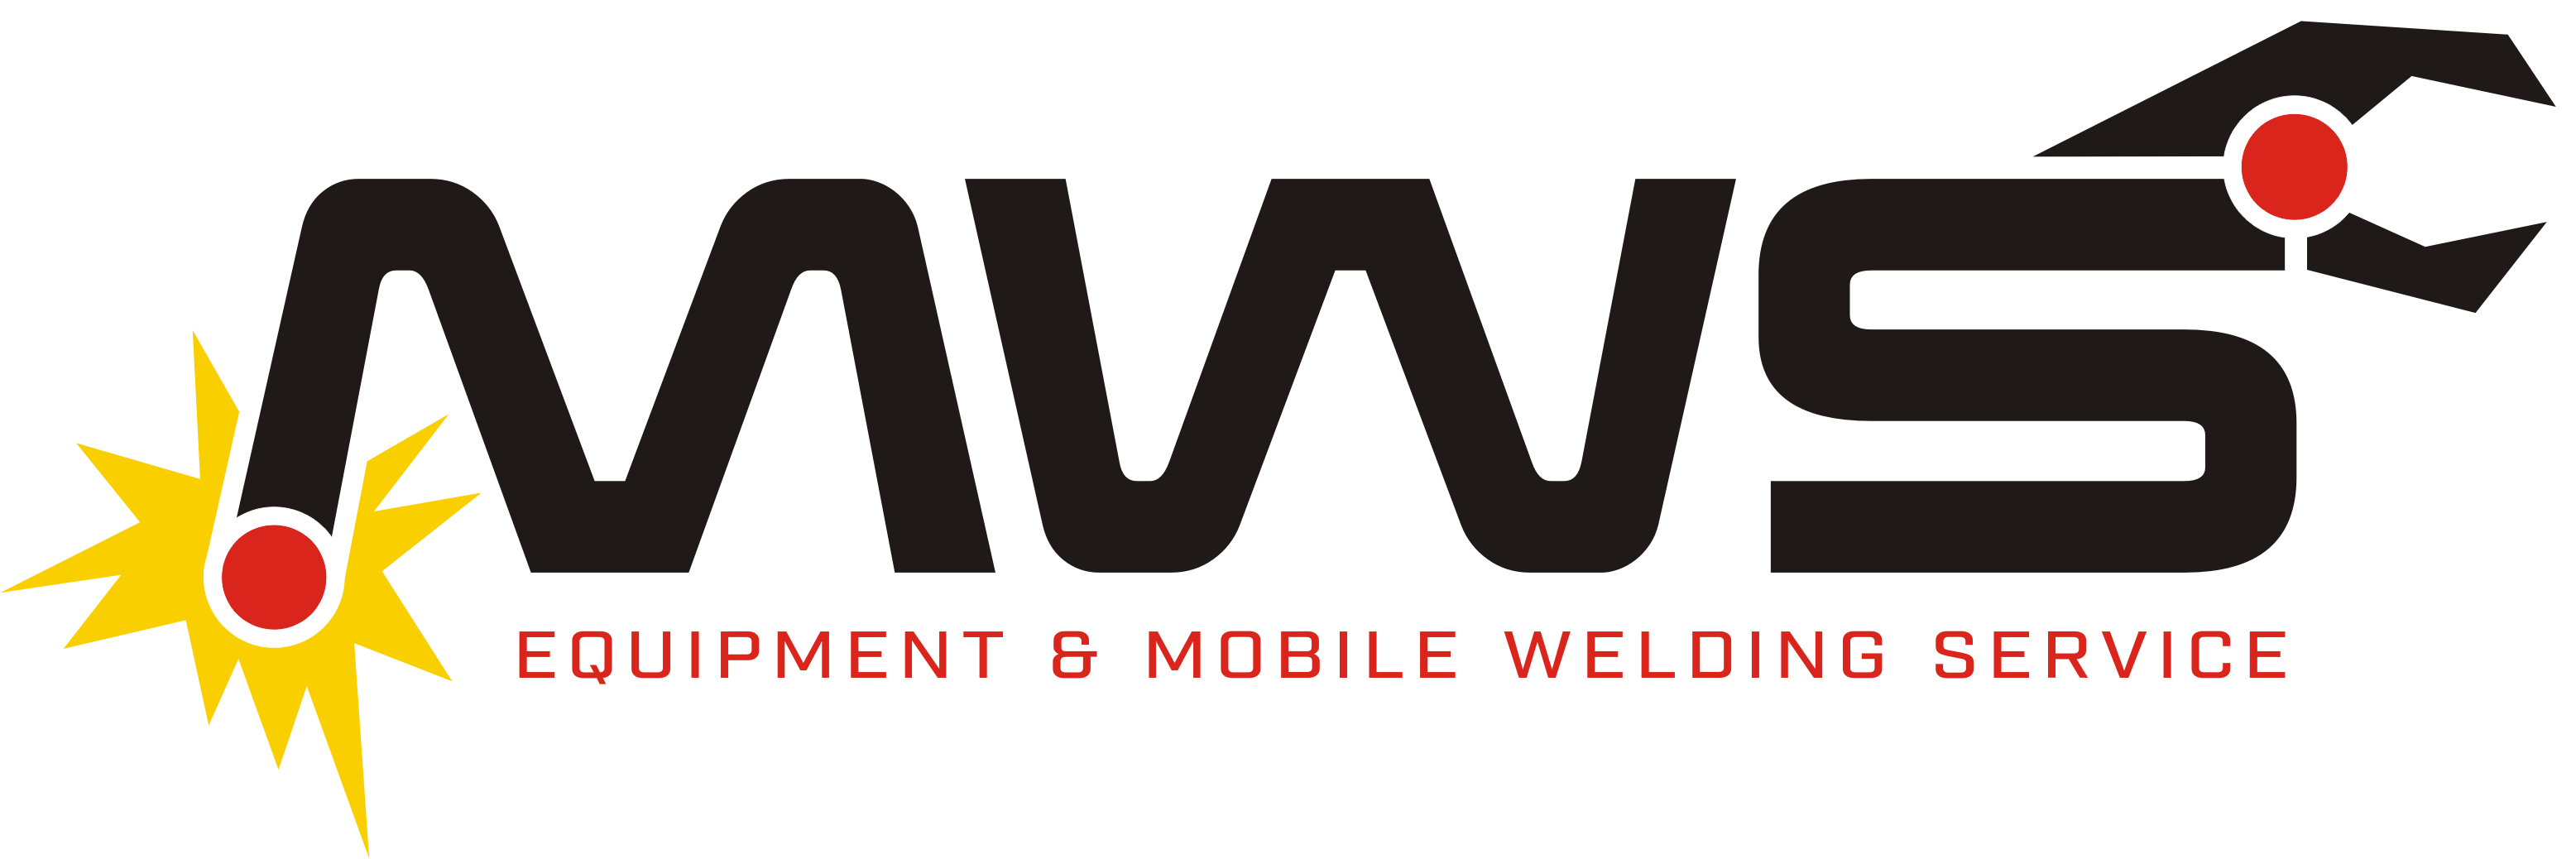 Mobile Welding Service